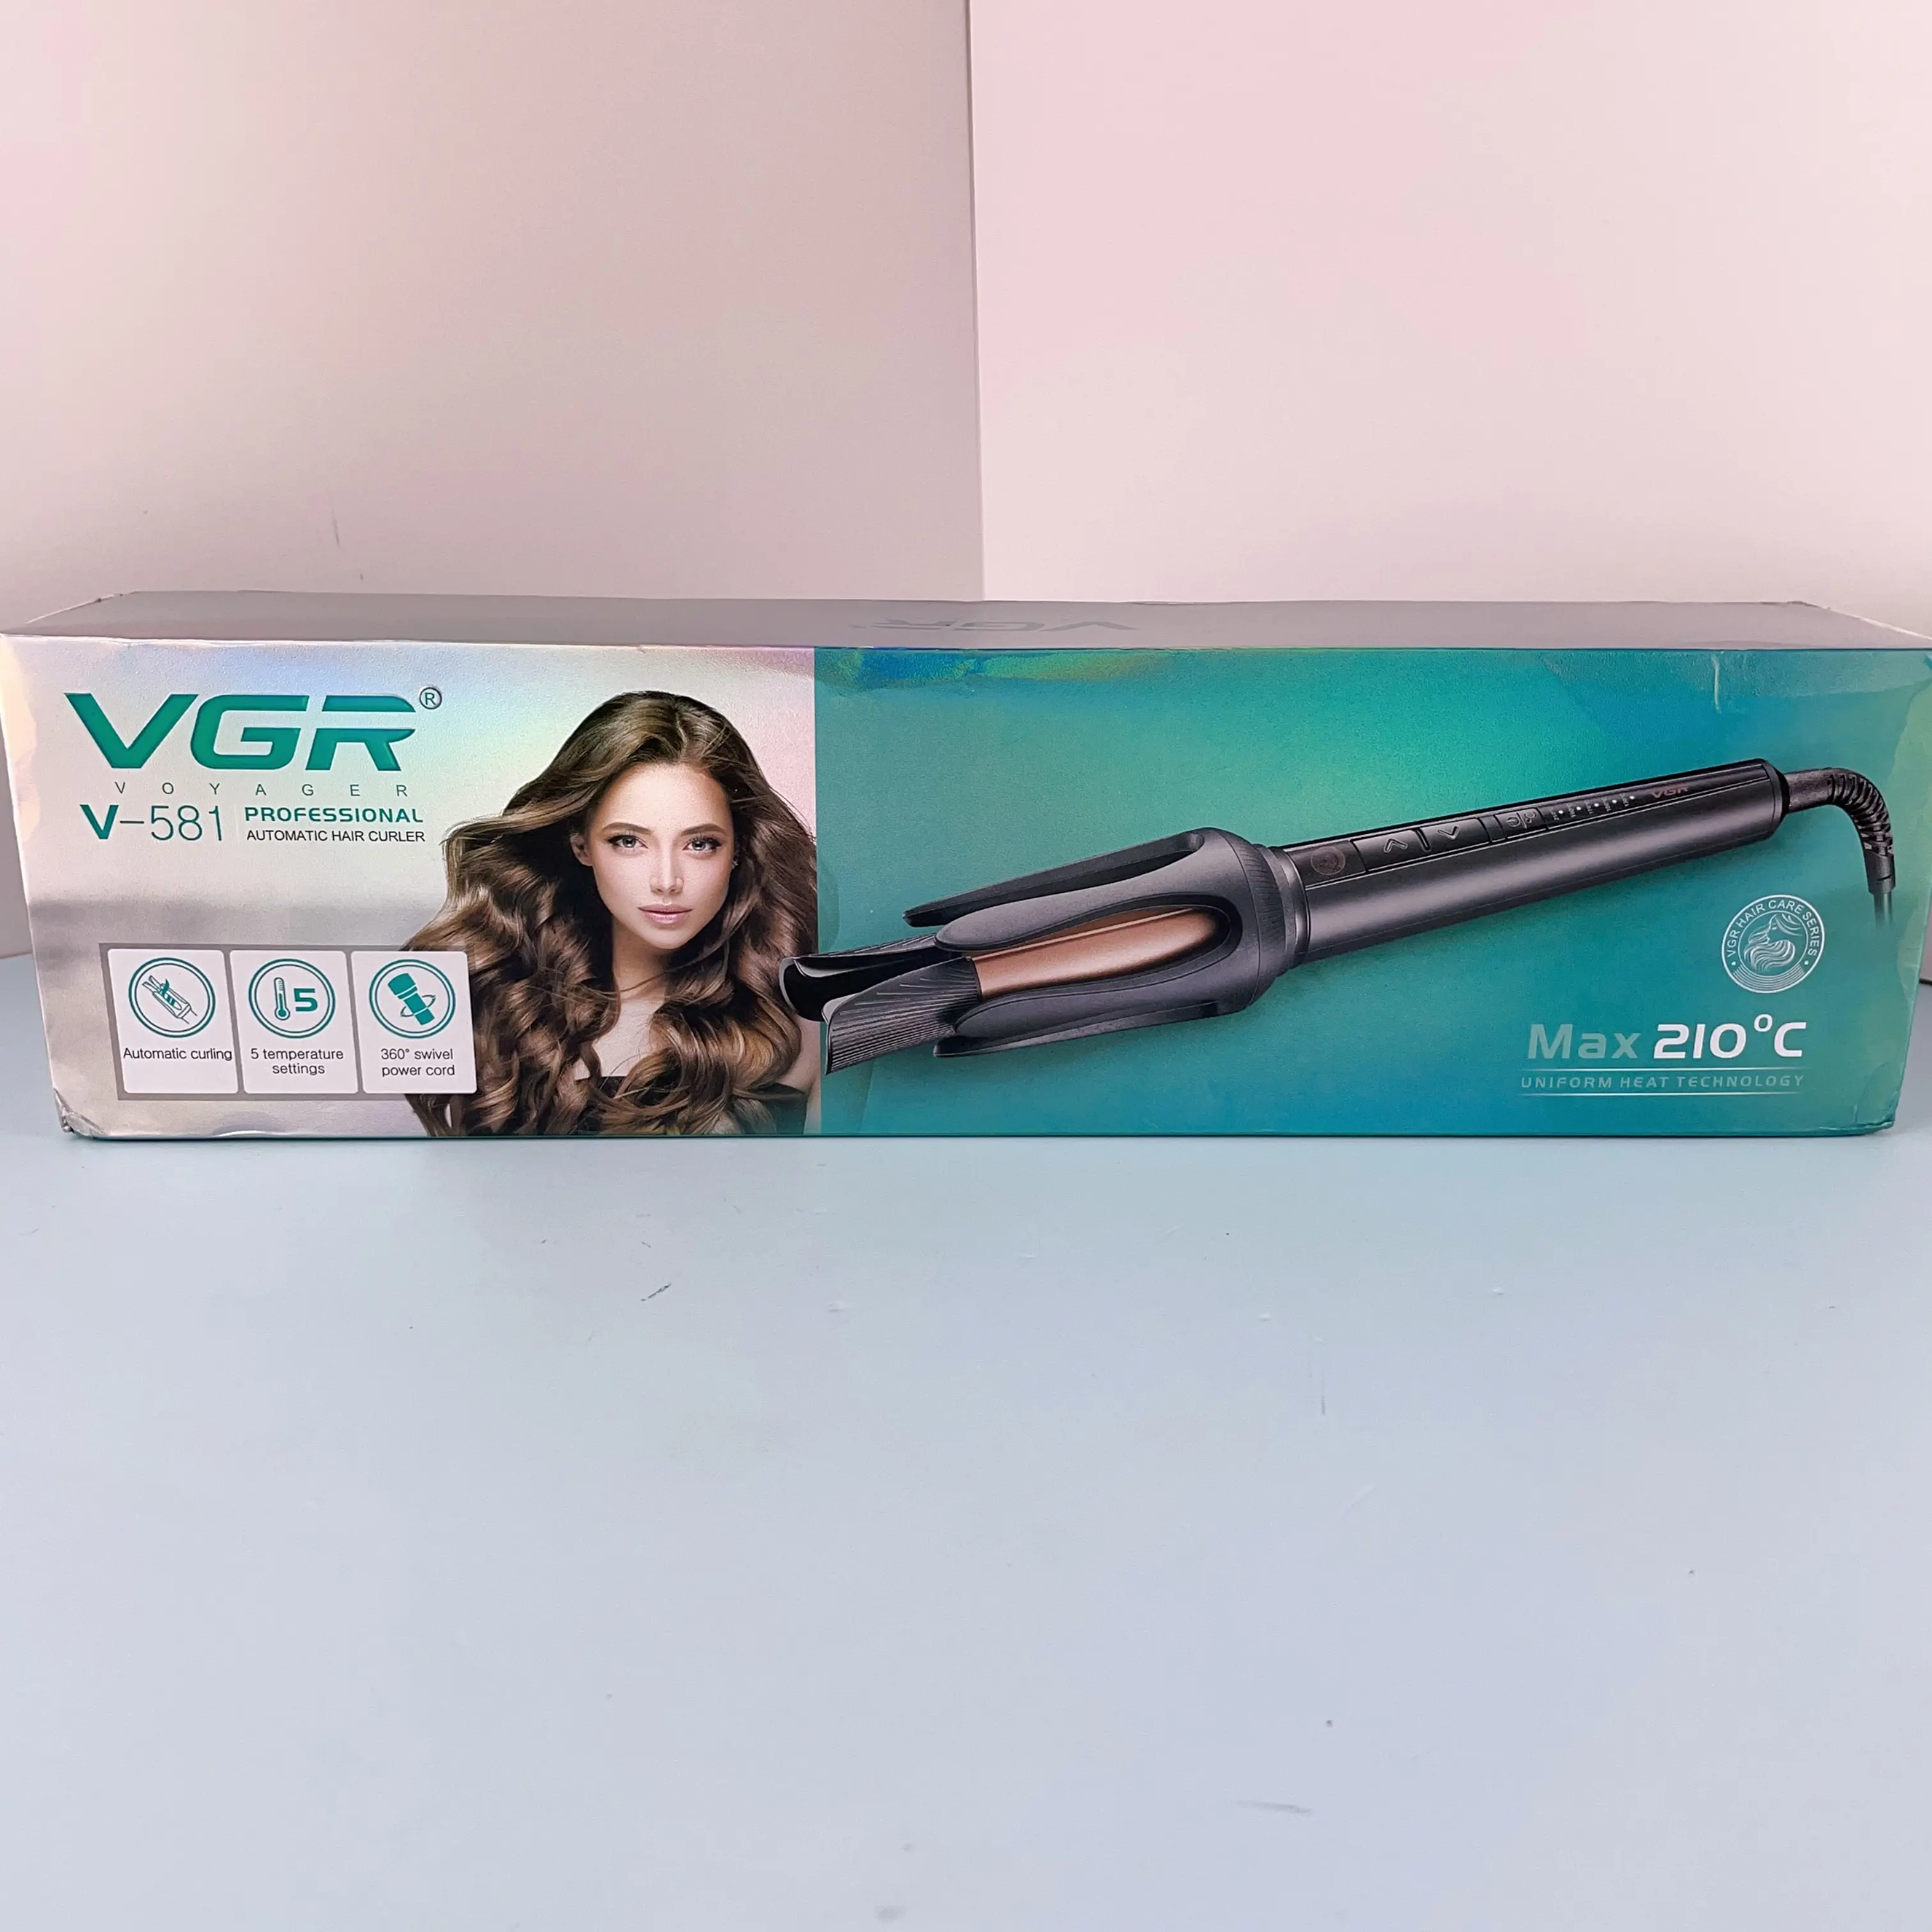 Vgr تصميم جديد موجة الشعر طلاء السيراميك الكهربائية المهنية Fof النساء